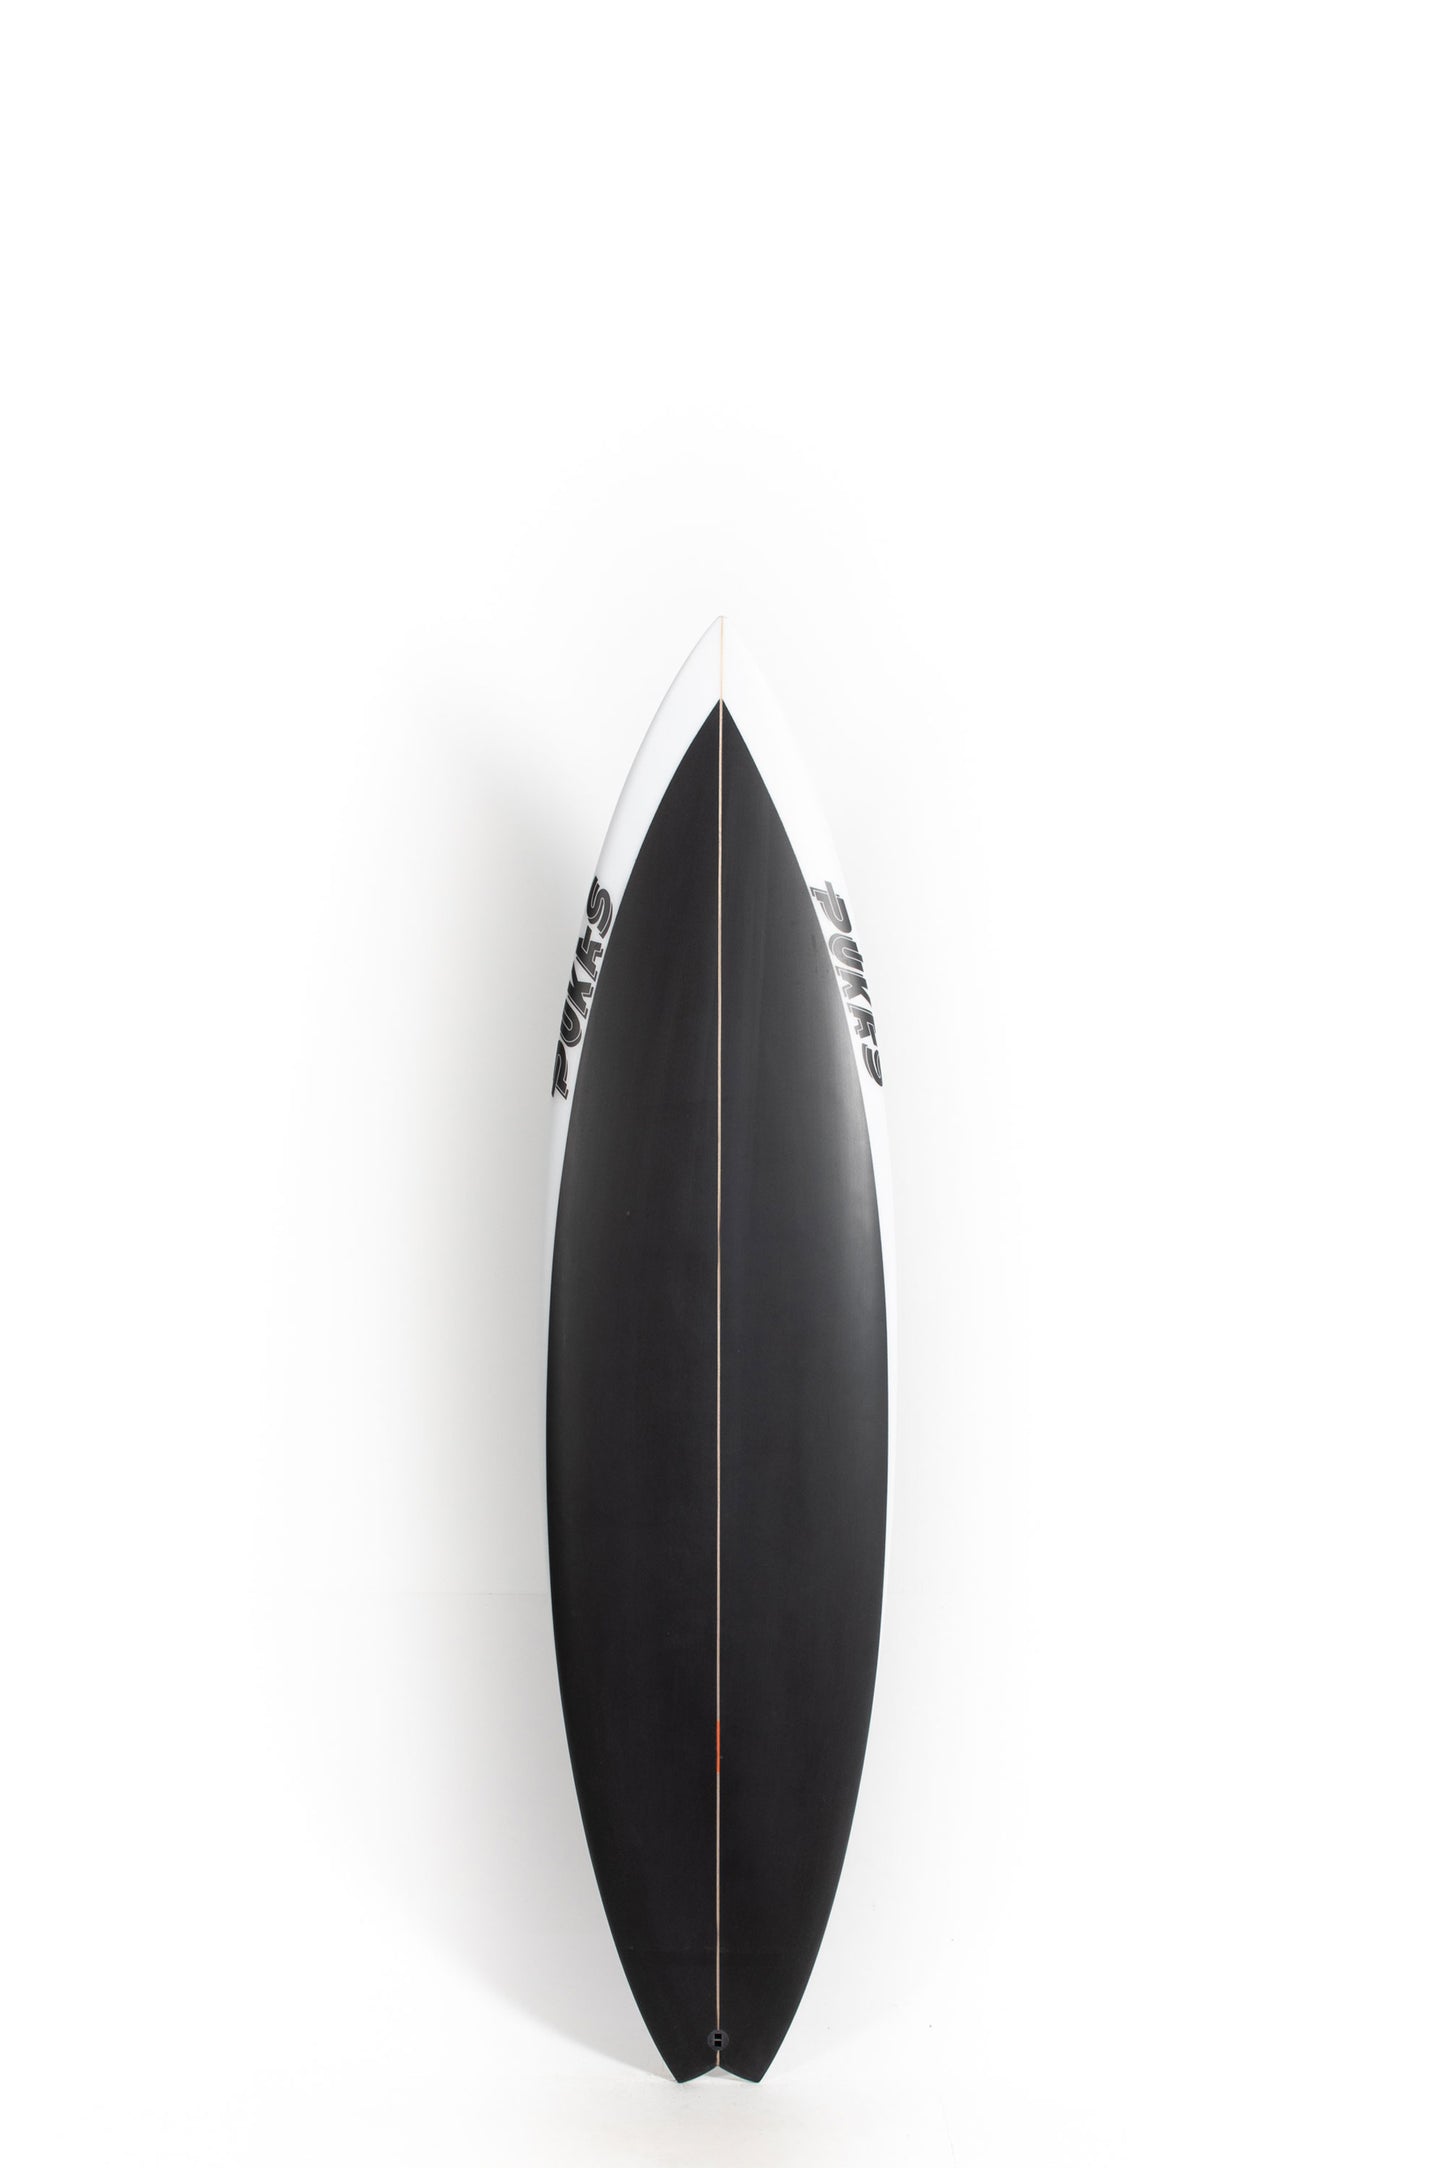 Pukas Surfboard - WATER LION ULTRA by Chris Christenson - 6'4” x 